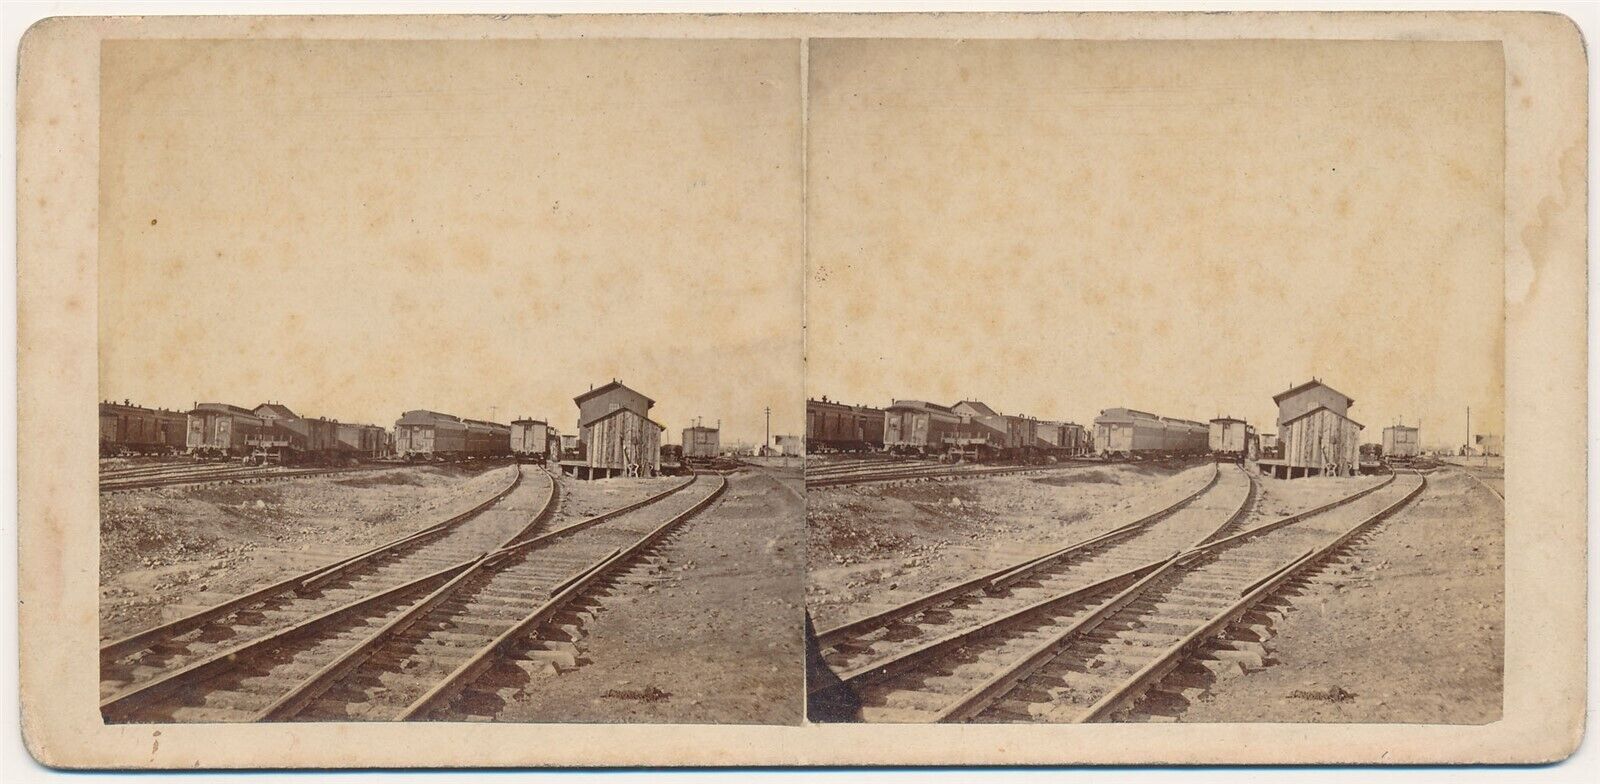 UTAH SV - Railroad Yard & Passenger Cars - 1870s